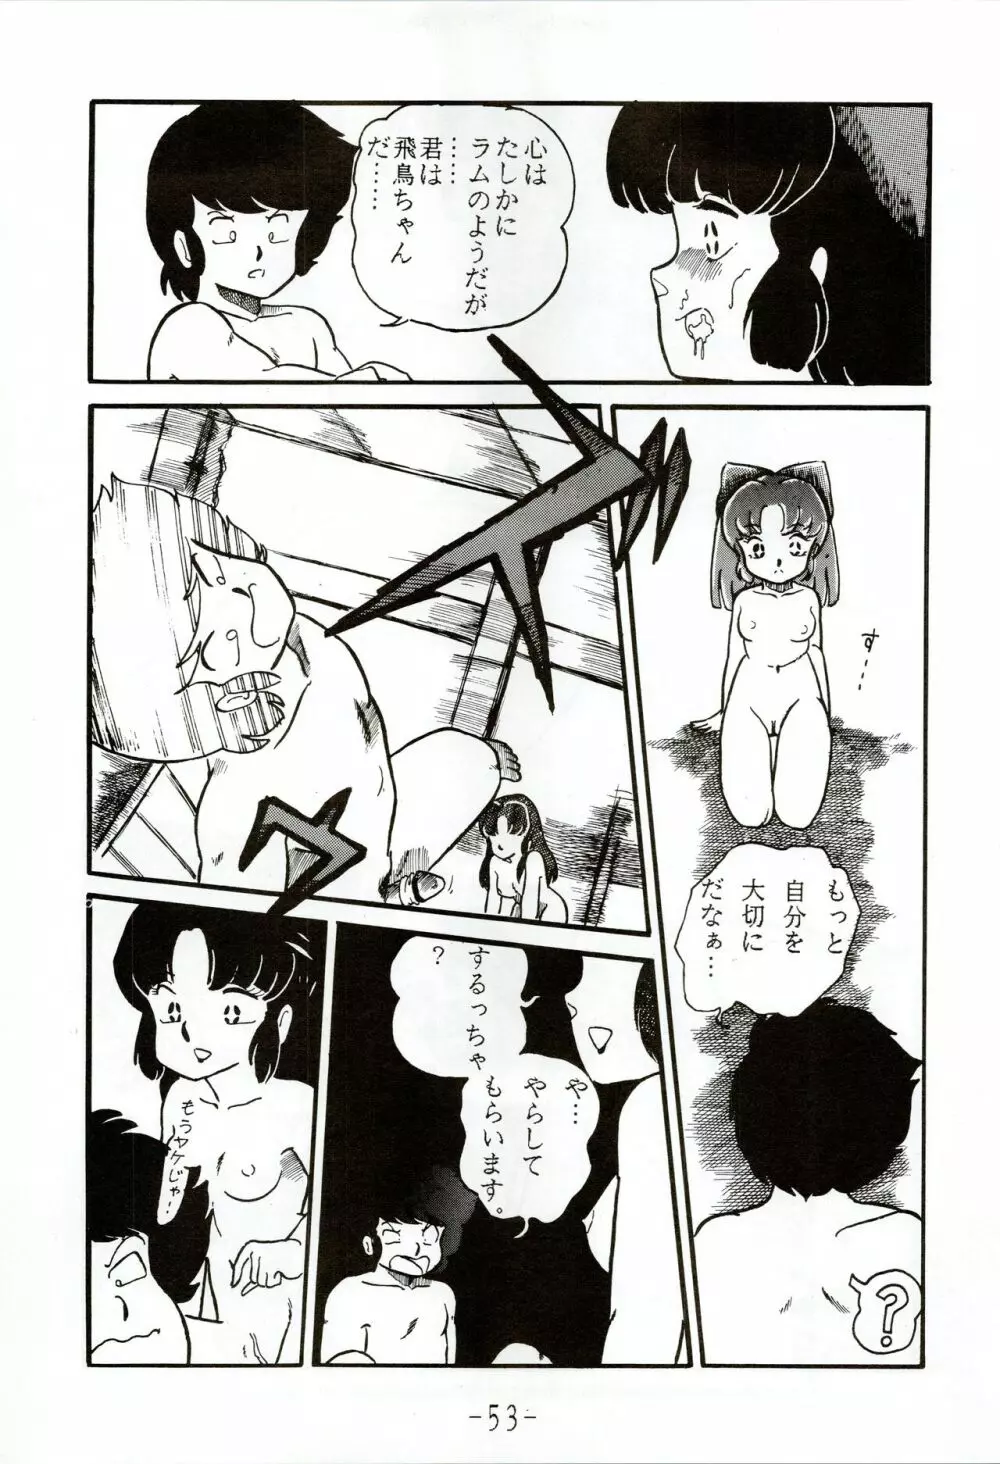 甲冑伝説 - page53